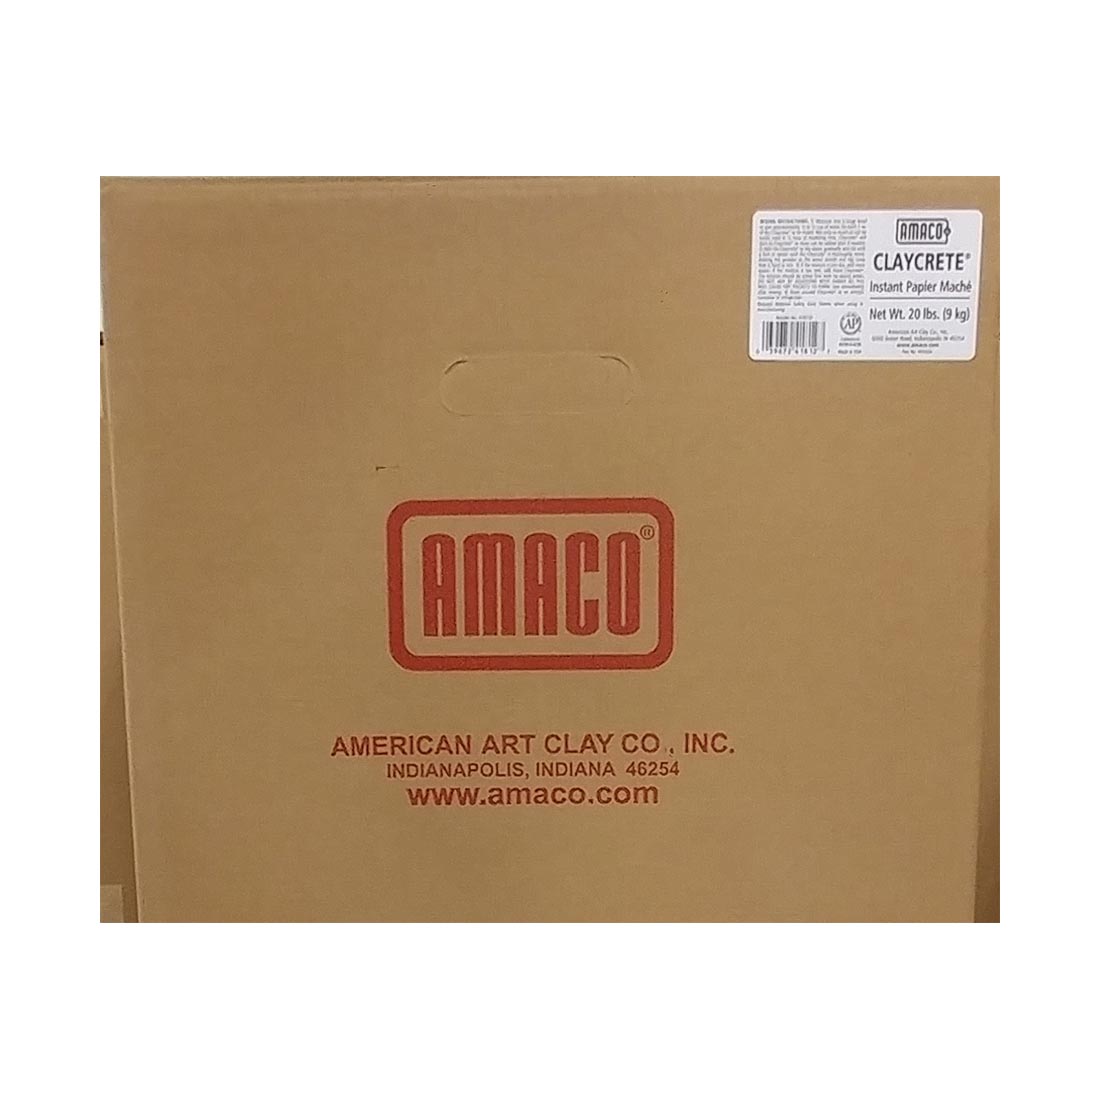 box of AMACO Claycrete Papier Mache